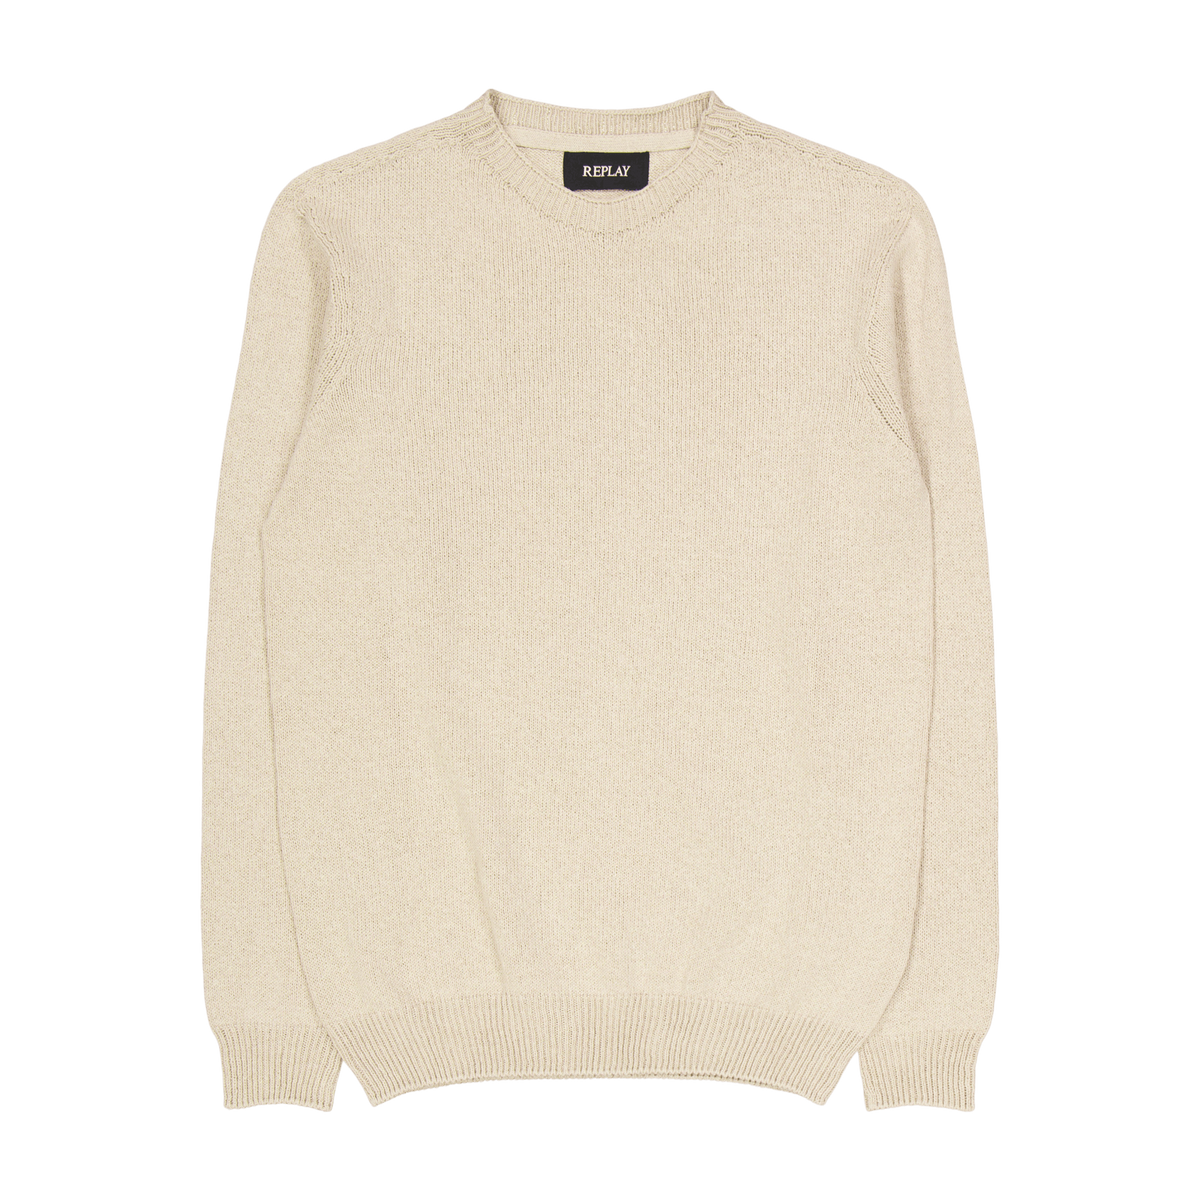 Cotton Knit Sweater 756 Sandshell